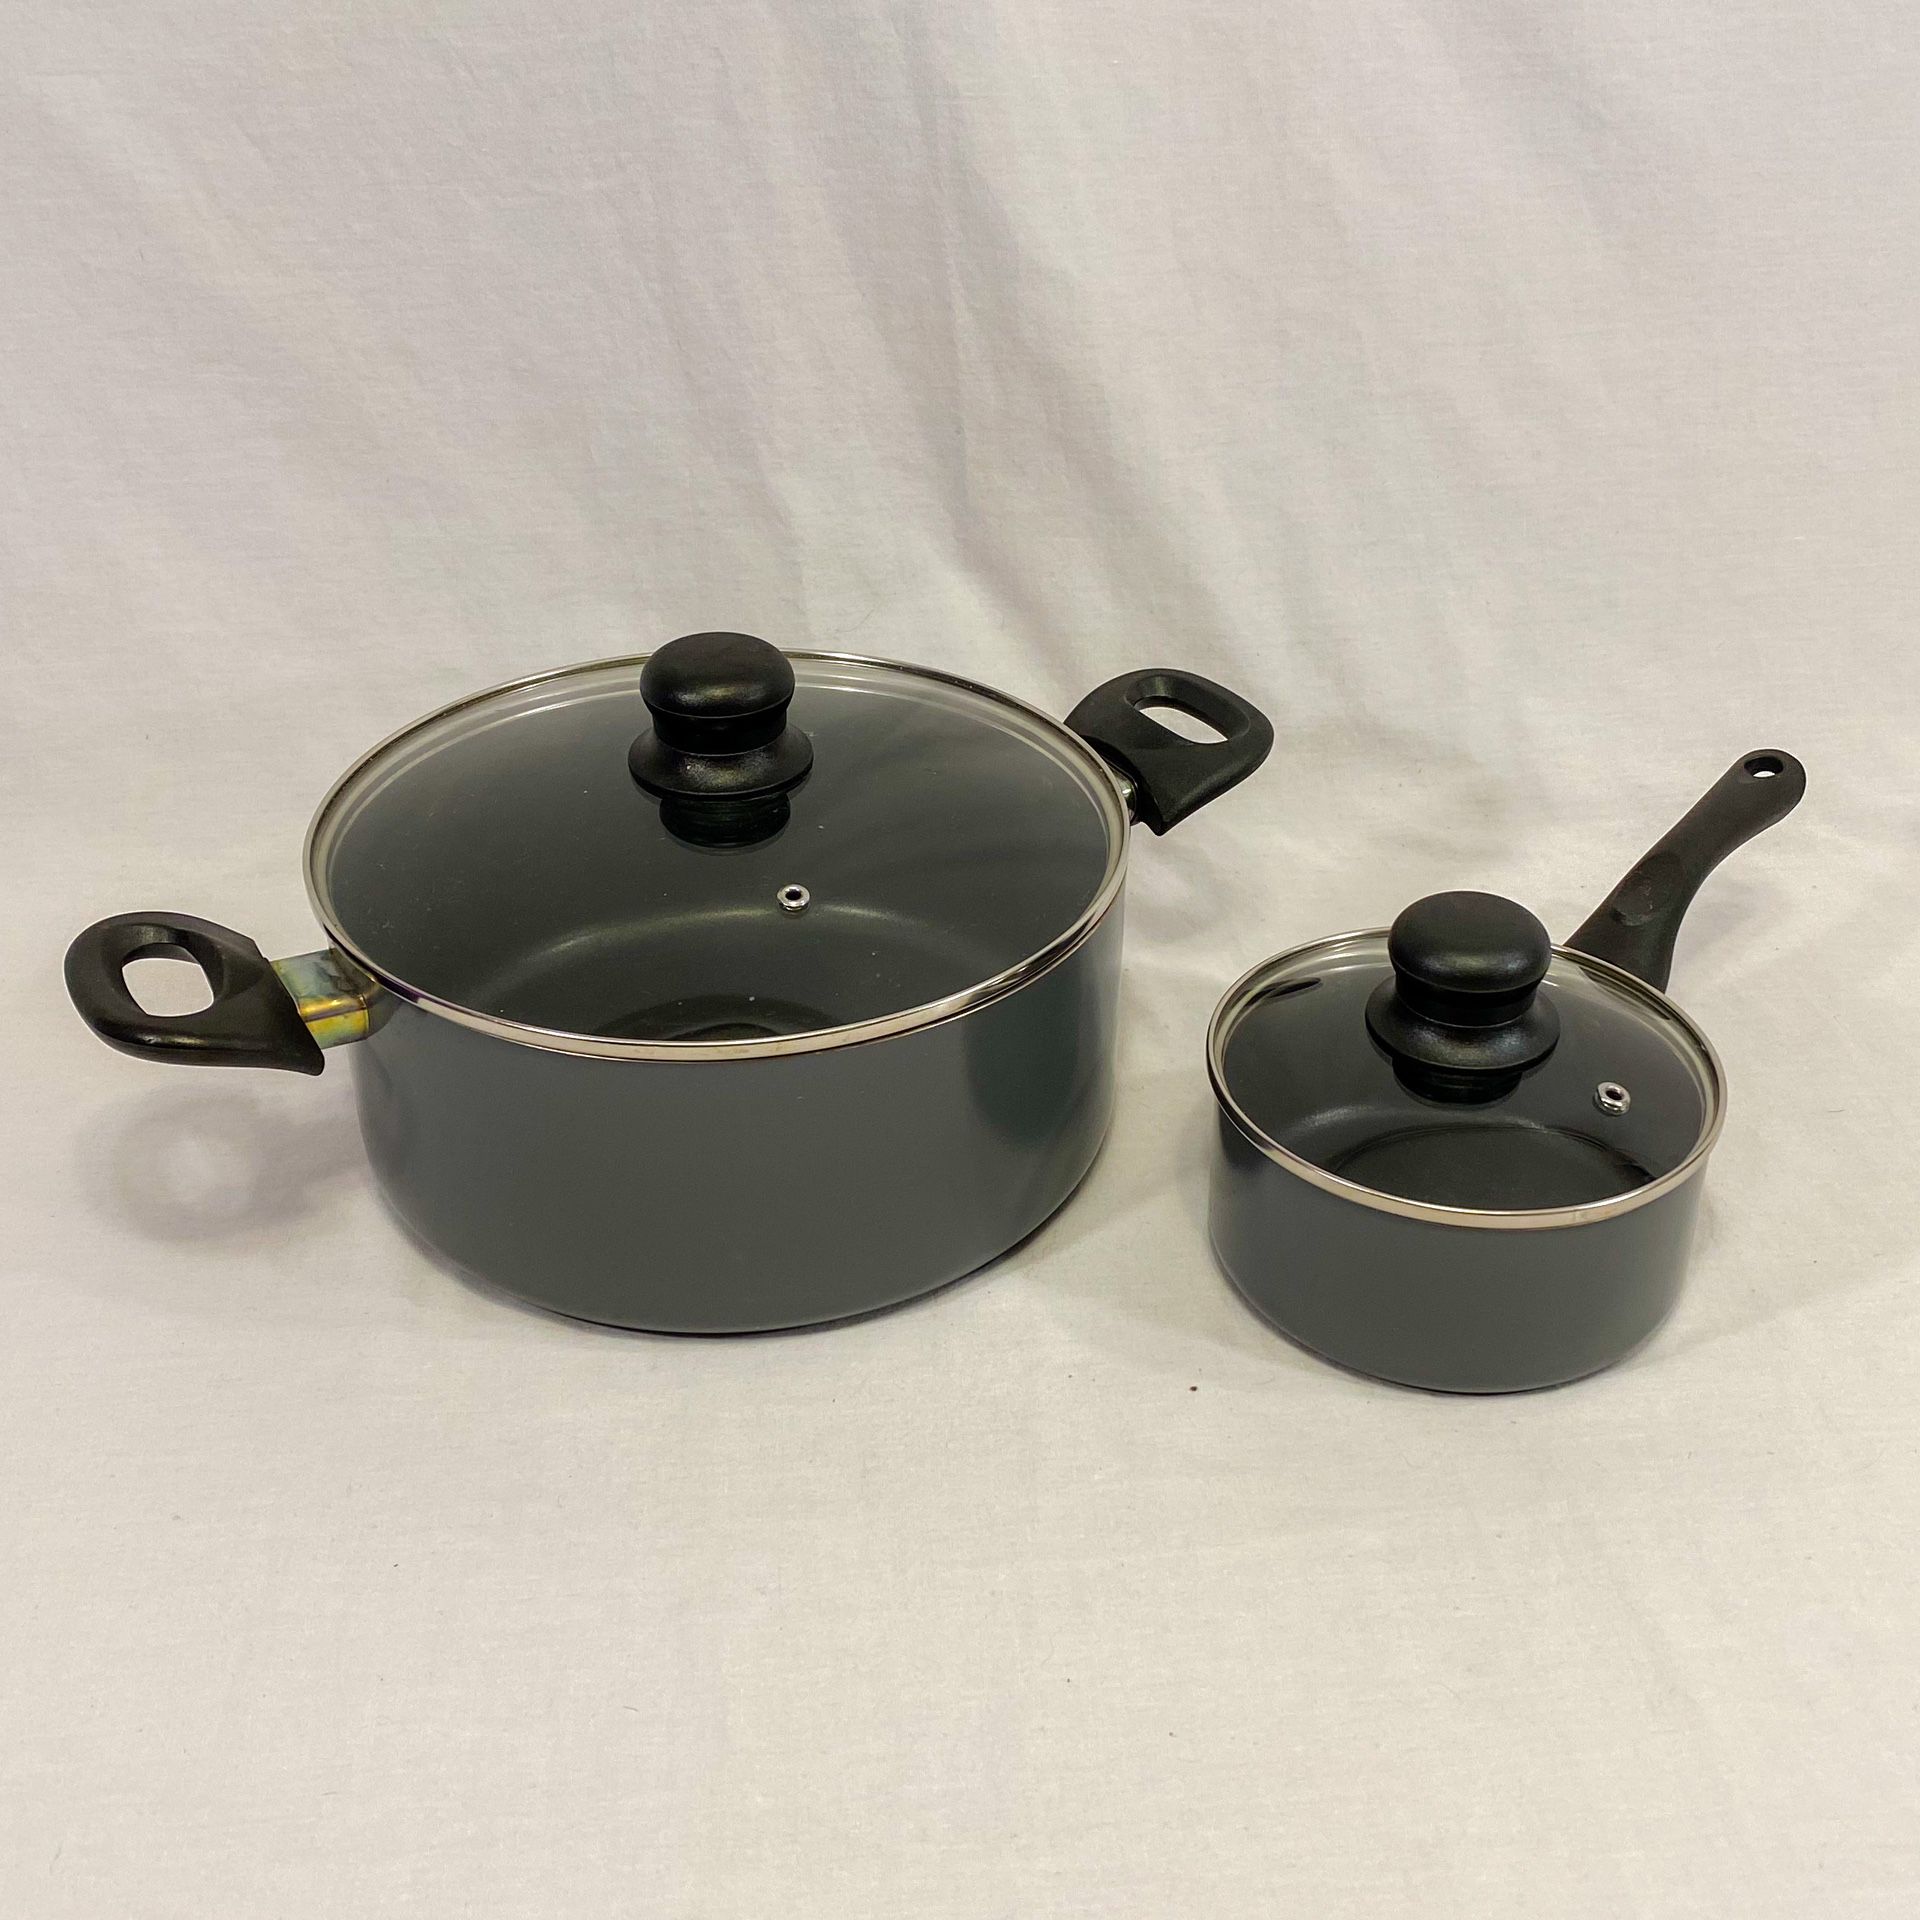 Pan/Pot Cooking Set w/Glass Lids